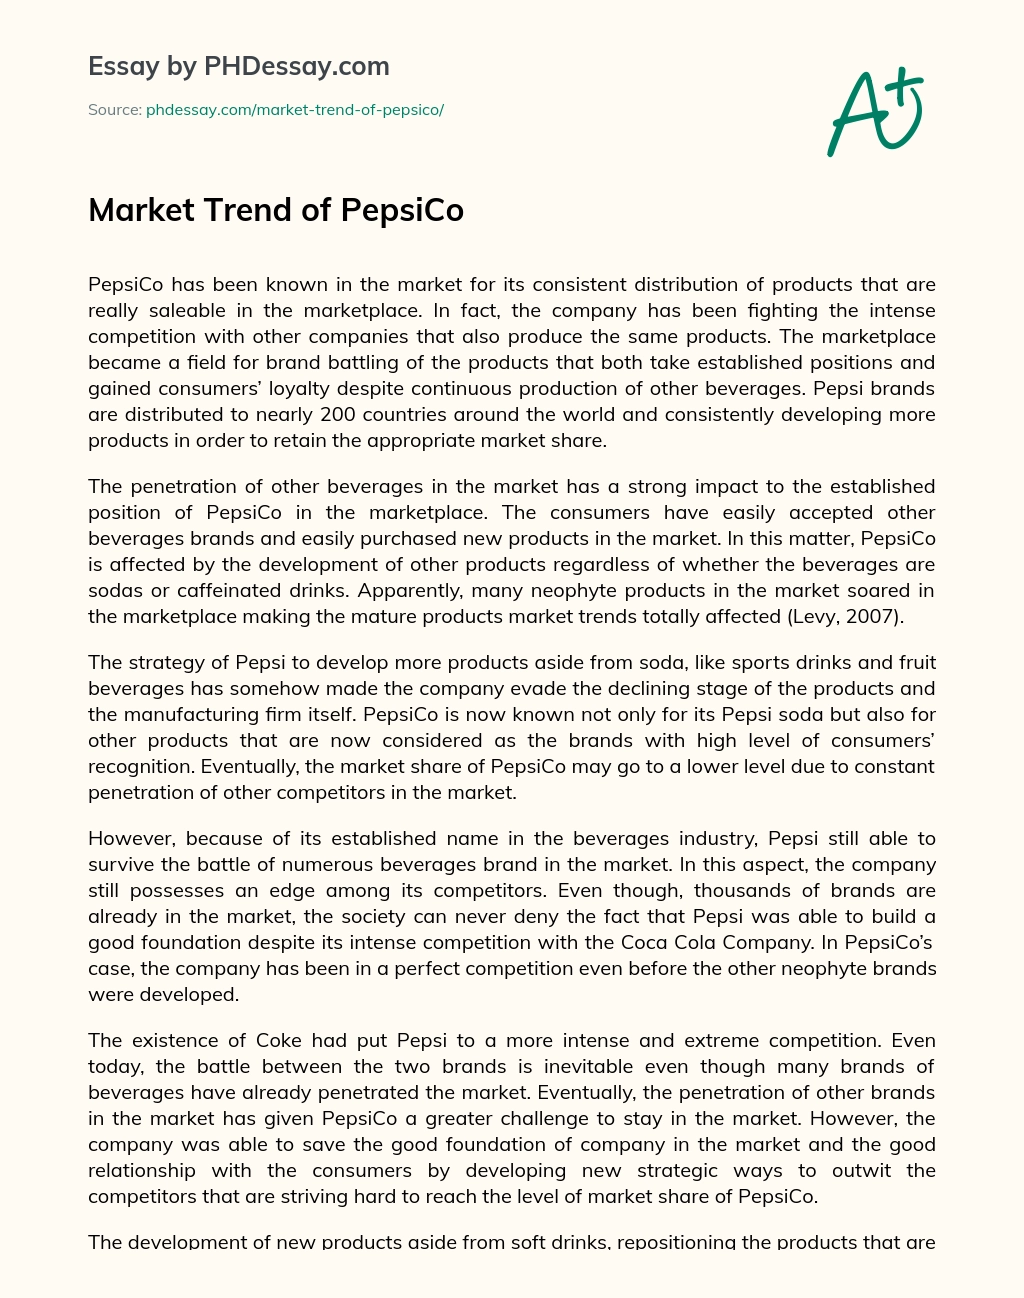 Market Trend of PepsiCo essay